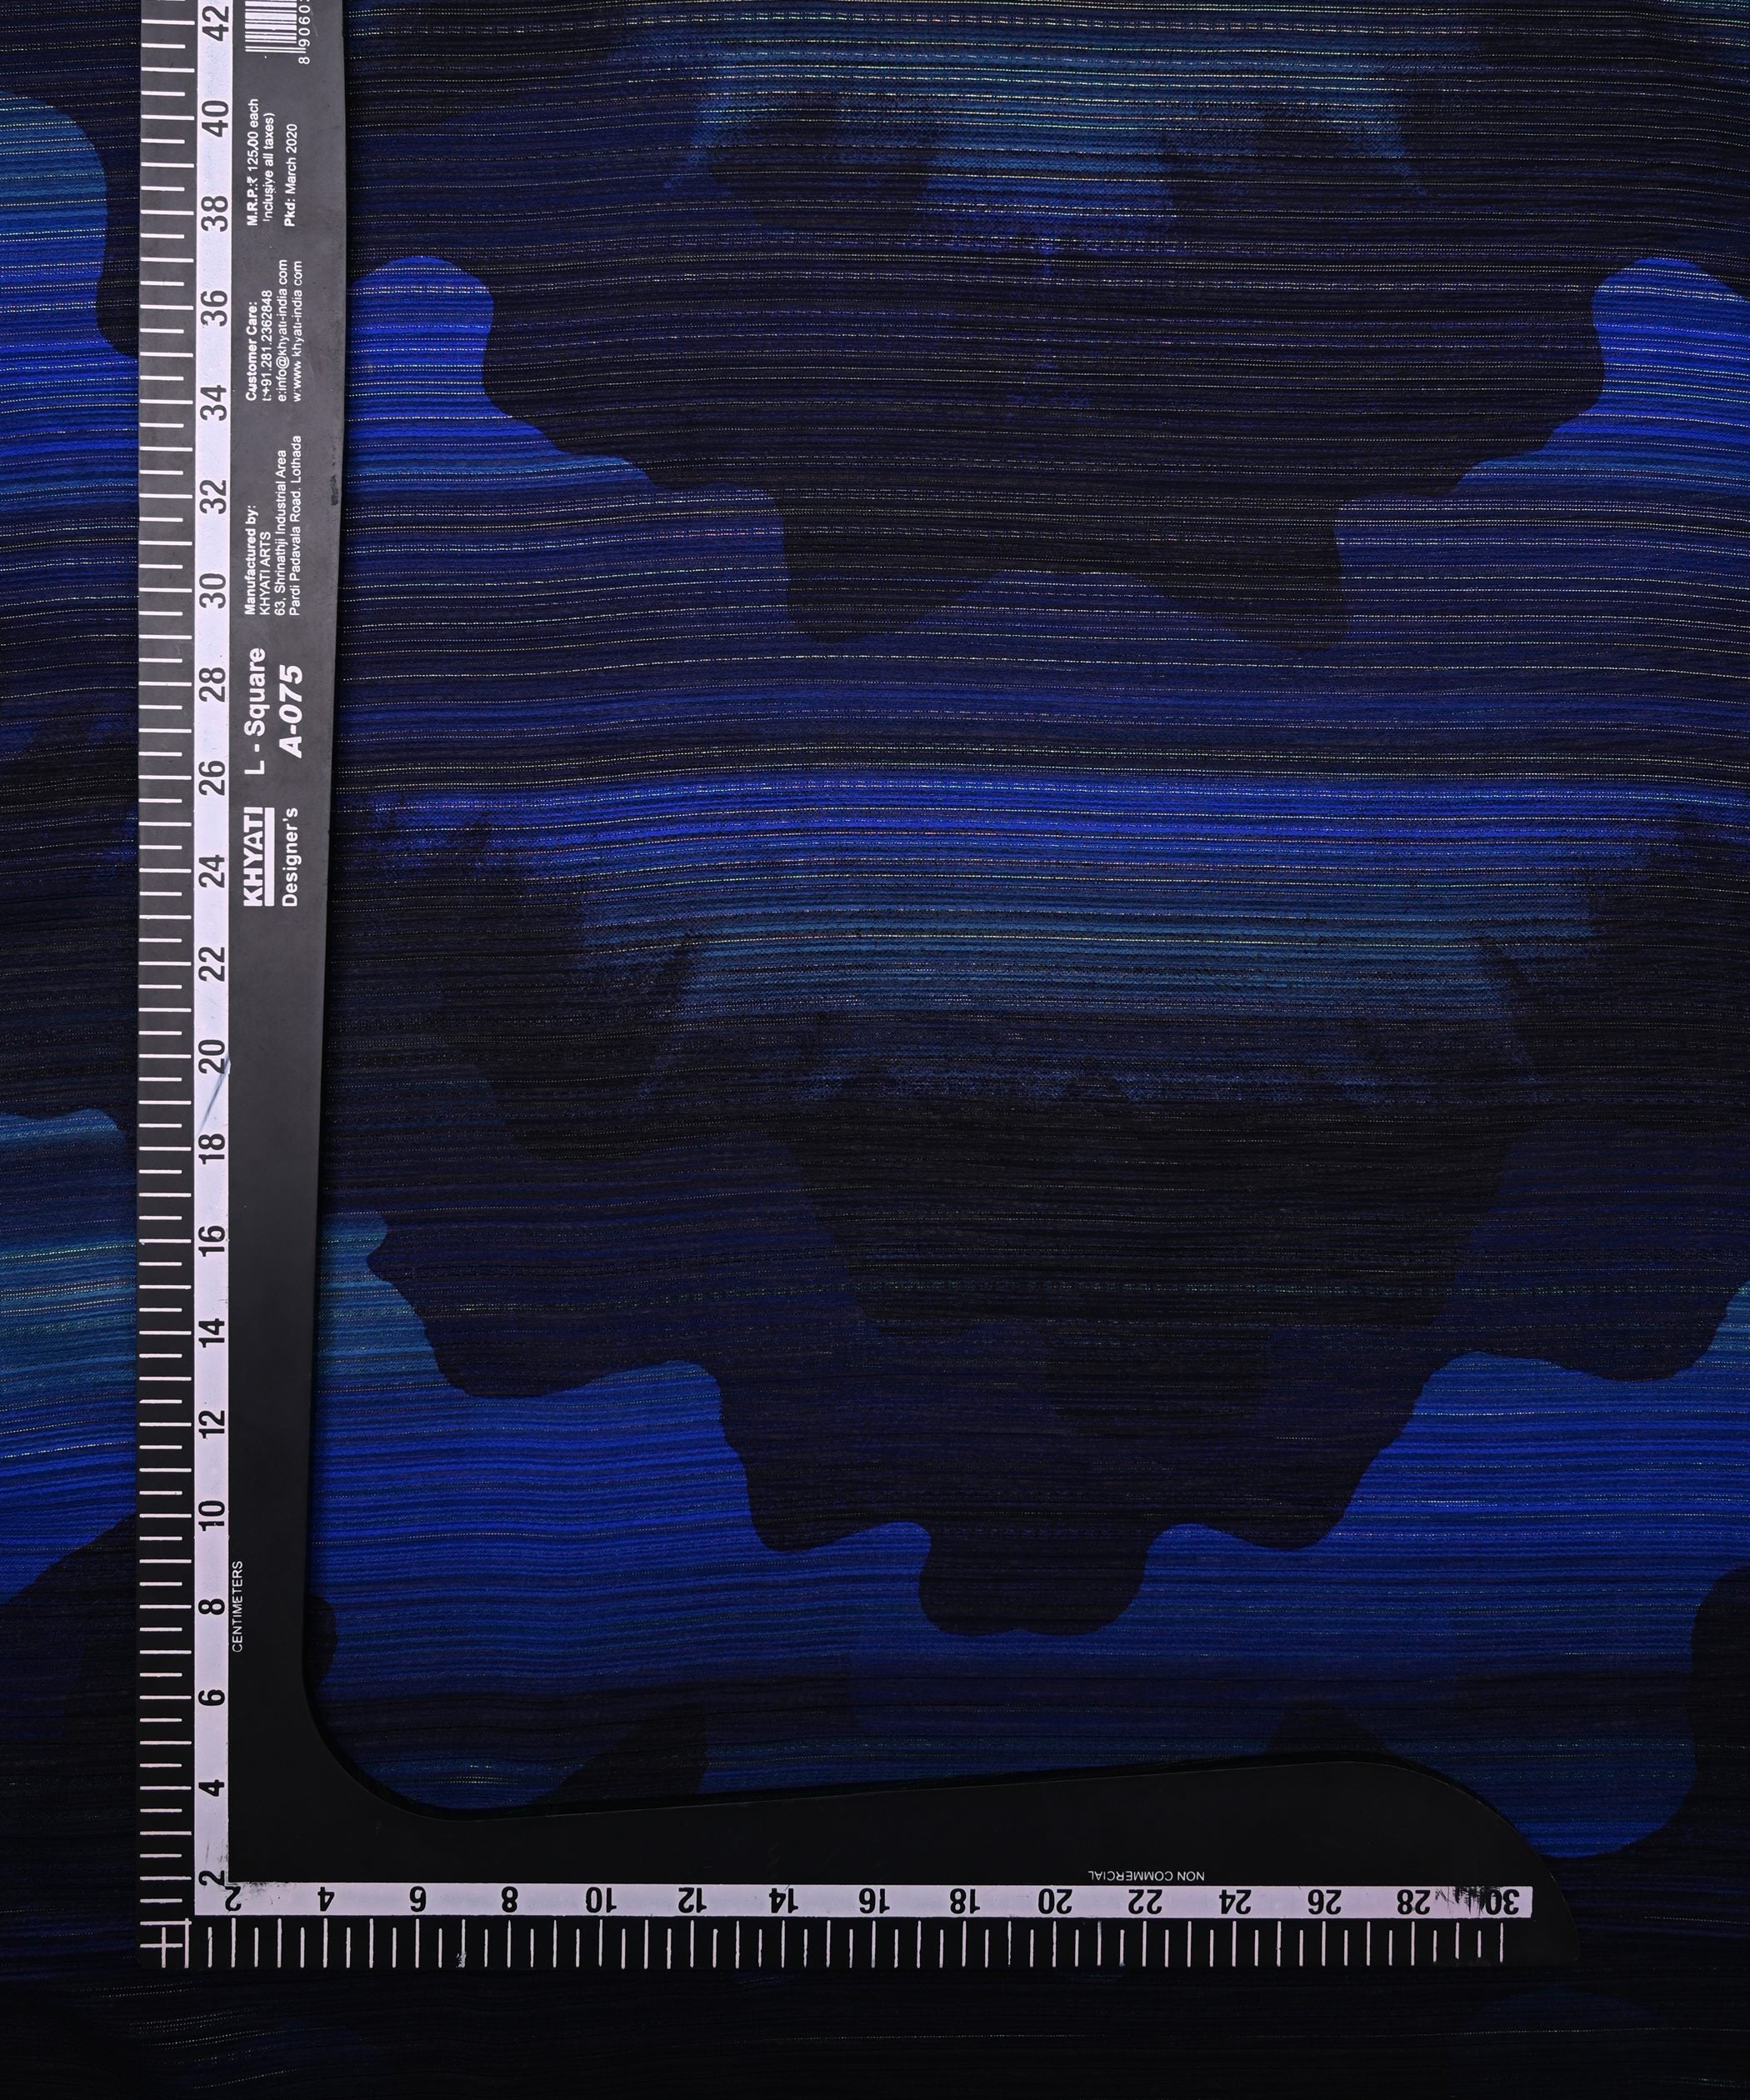 Royal Blue Georgette Fabric with Wavy Spray Print